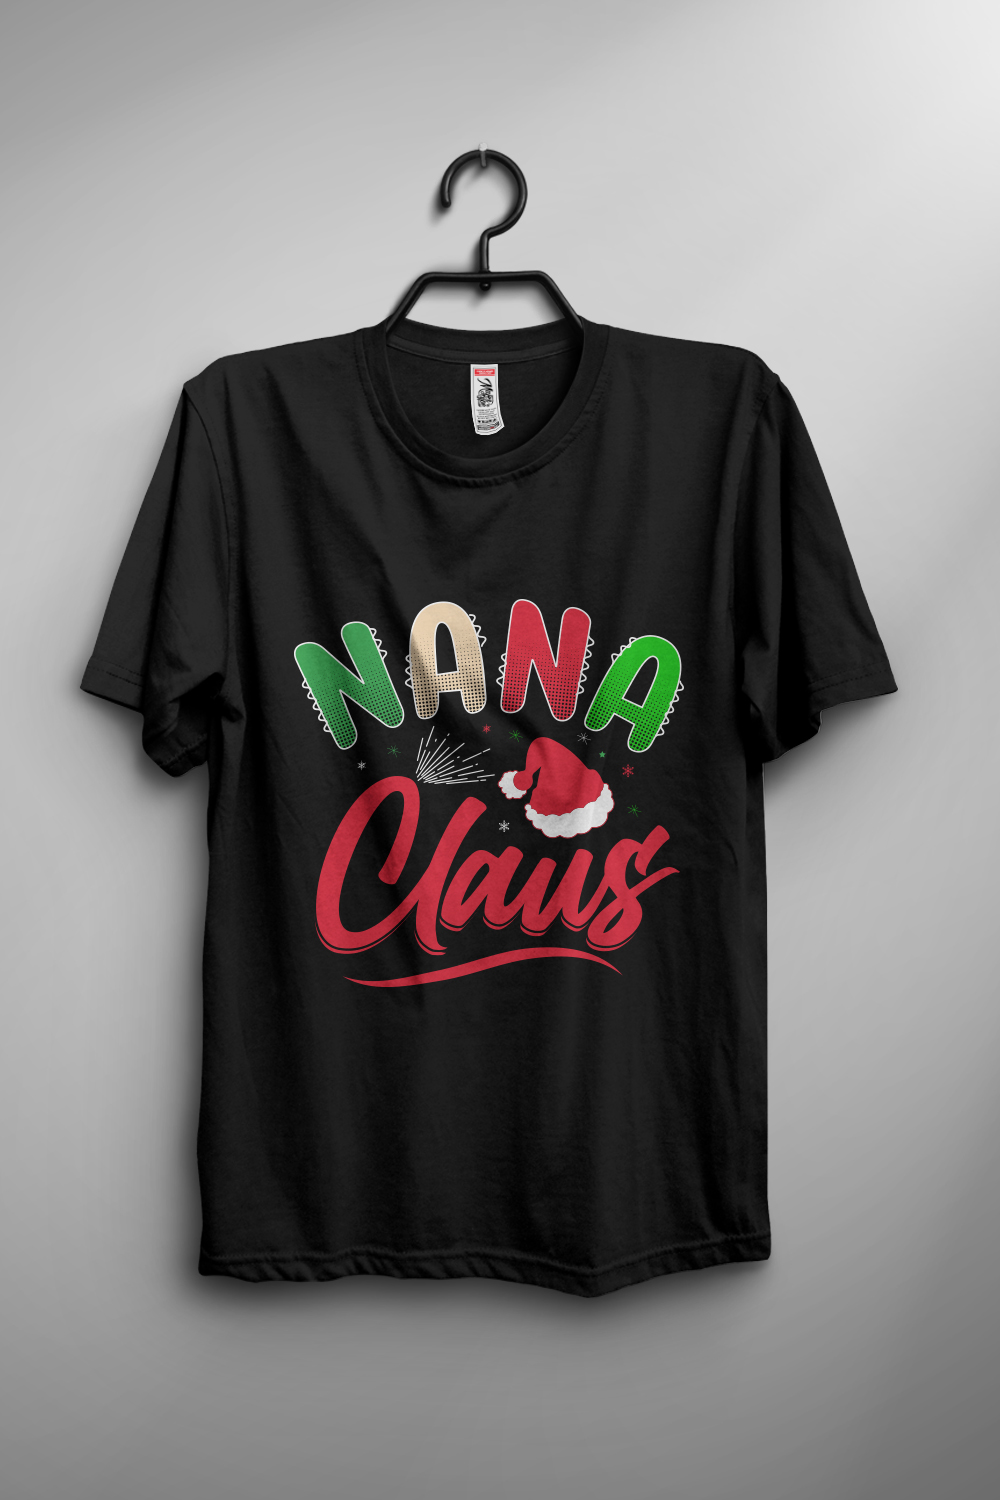 Nana claus T-shirt design pinterest preview image.